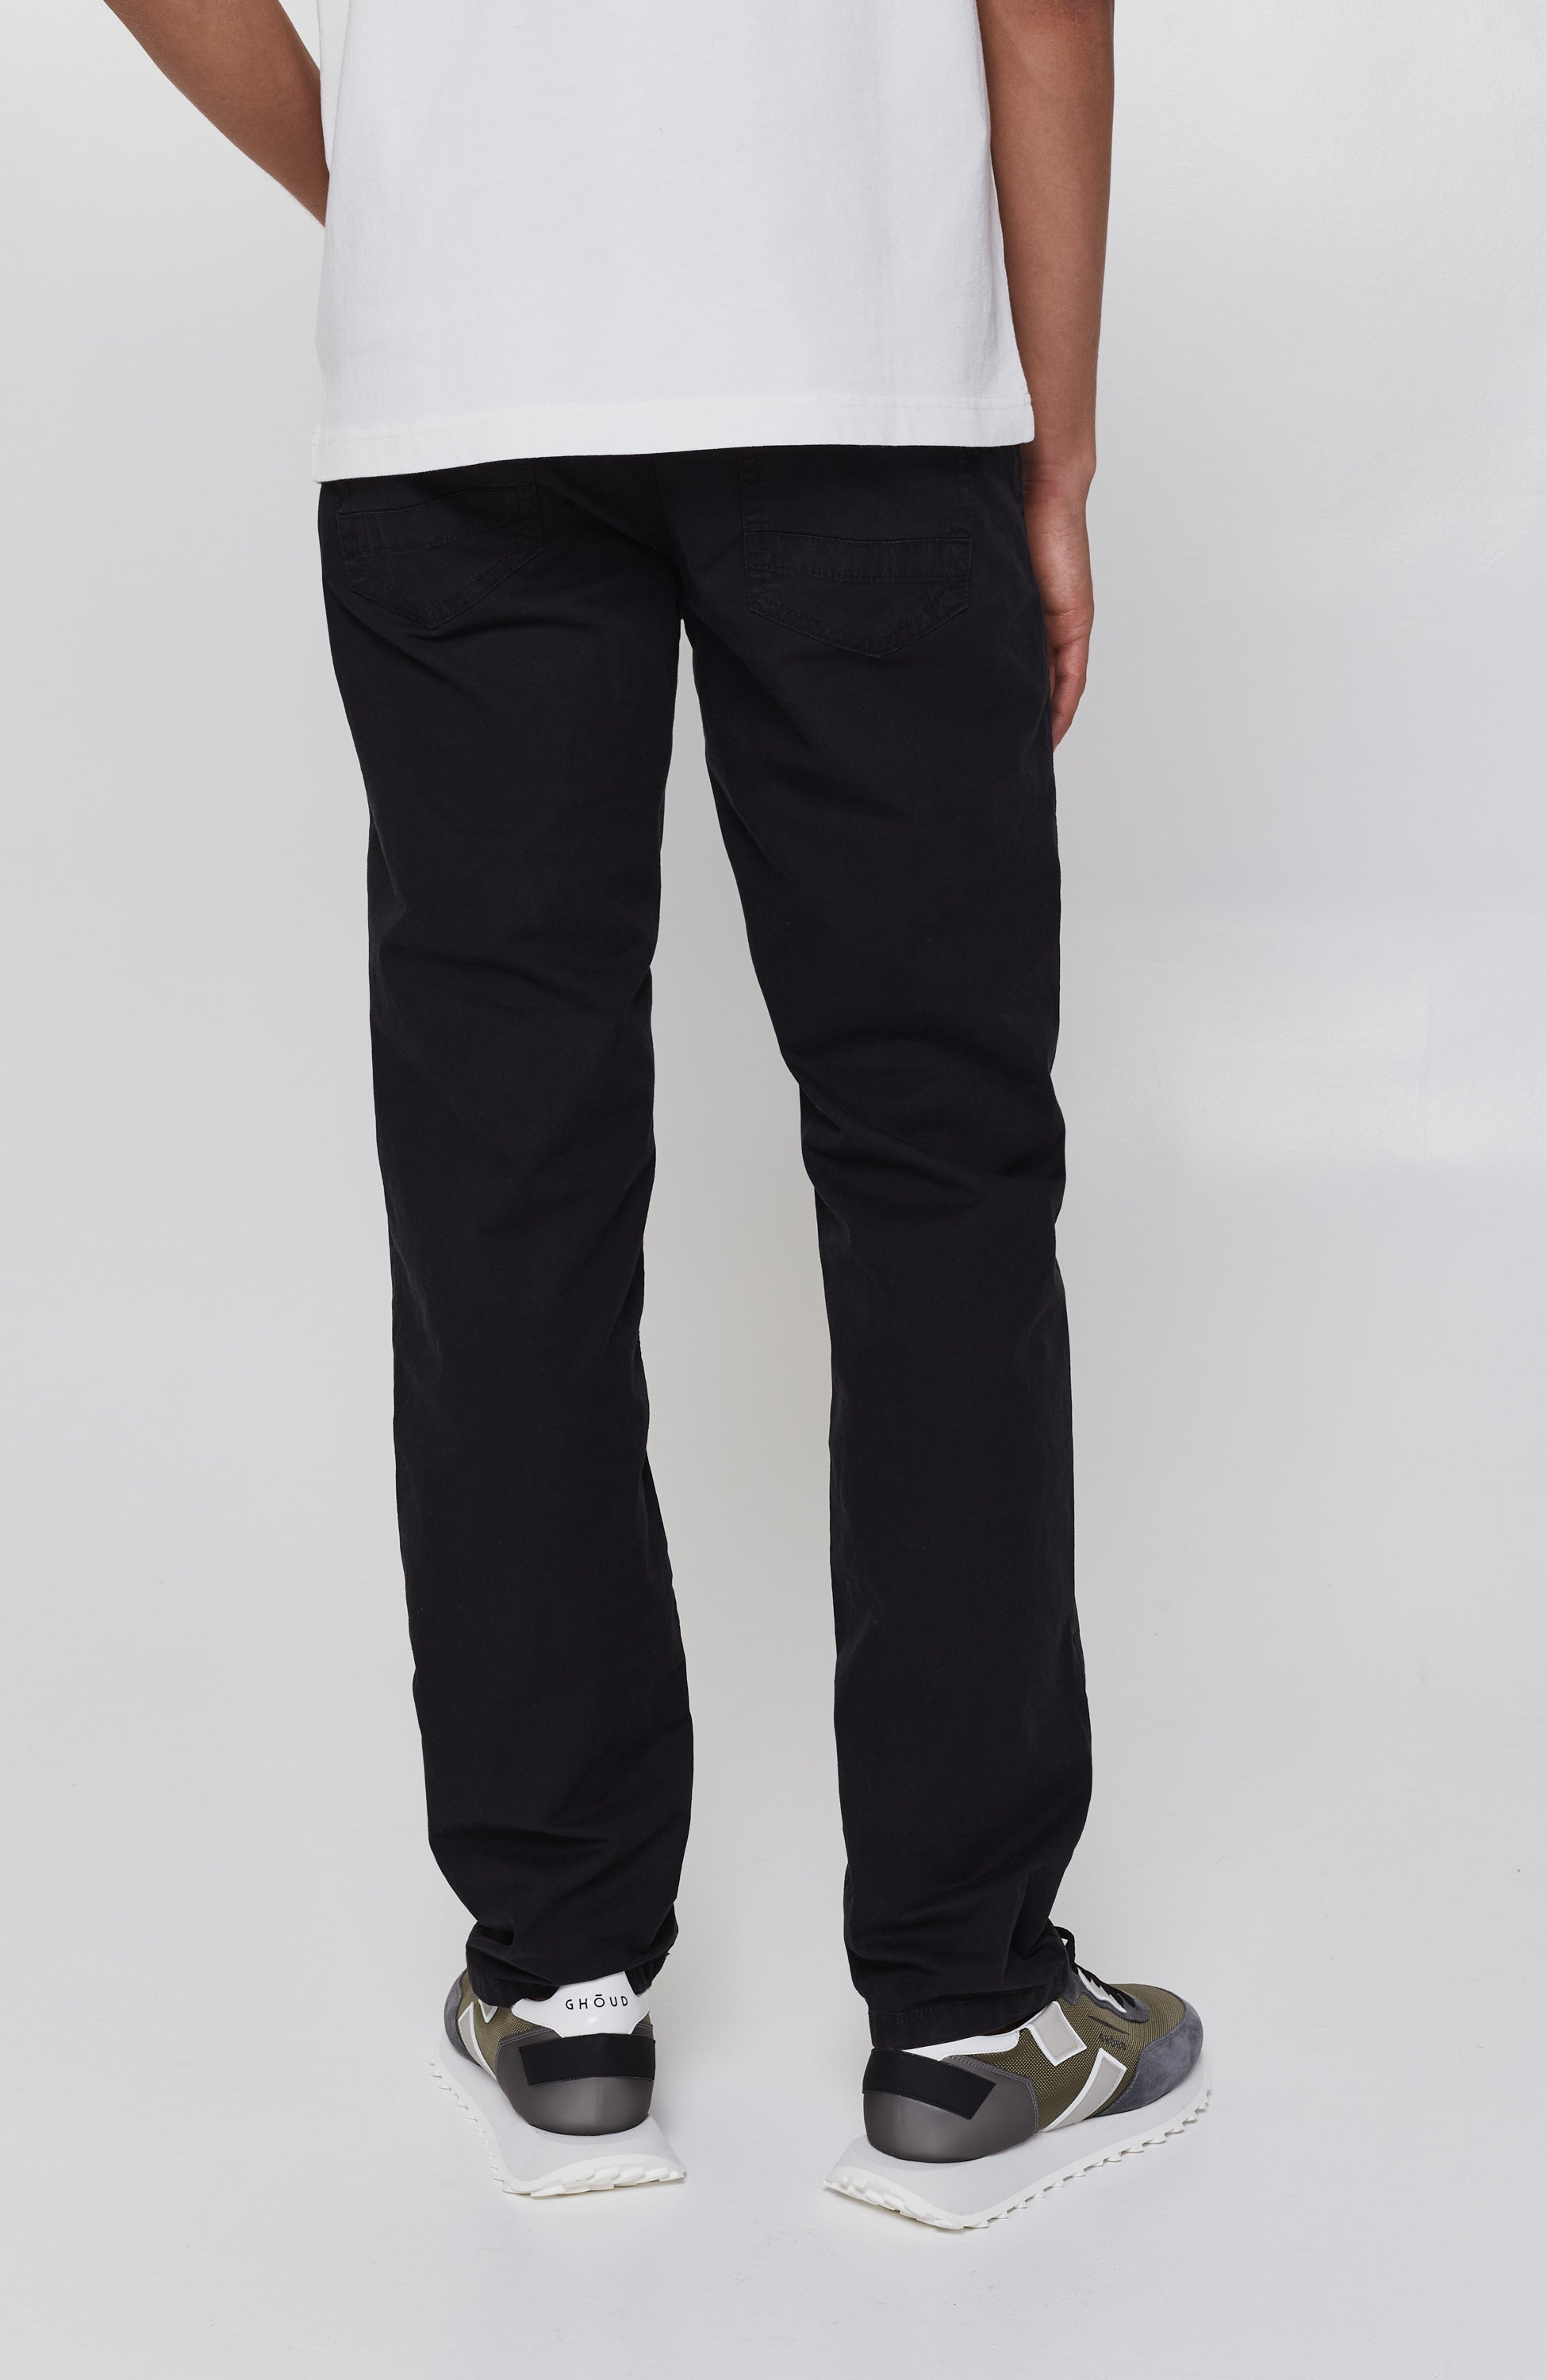 Lightweight cotton trousers